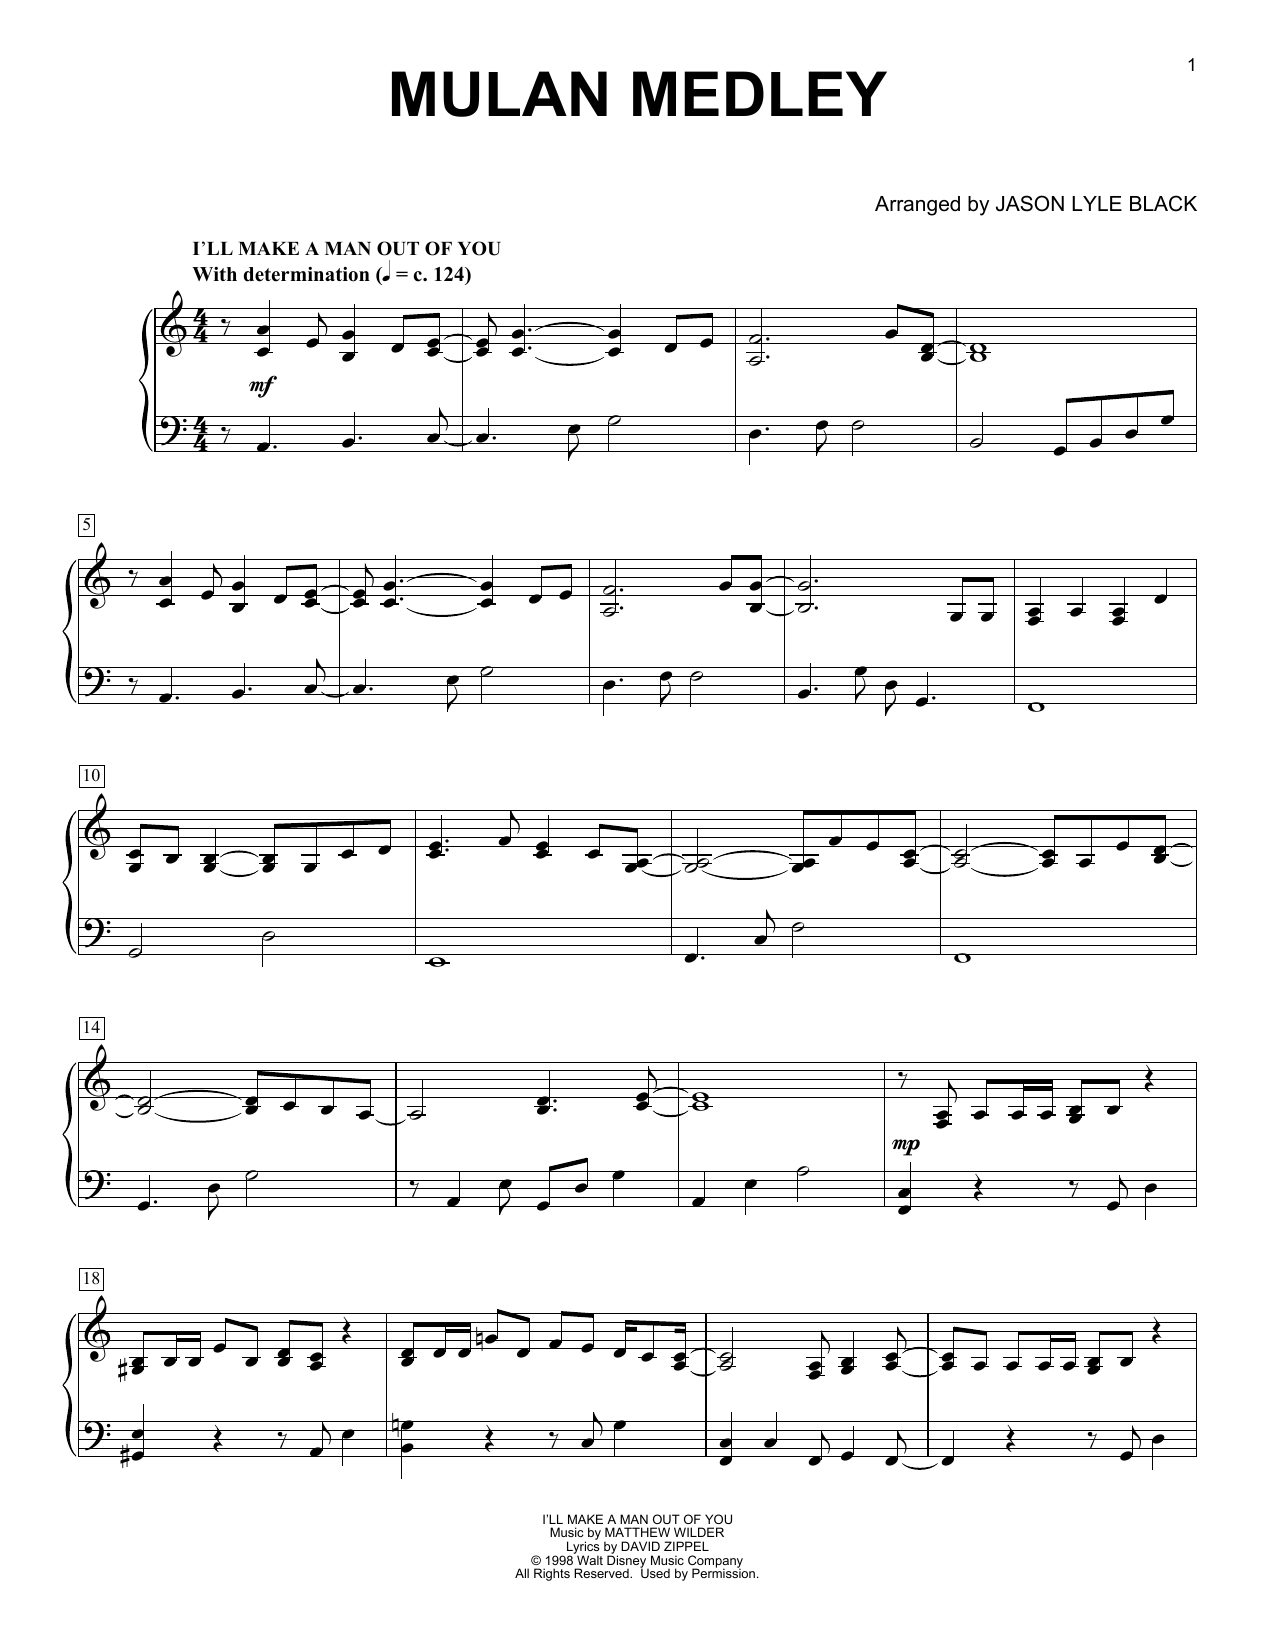 Matthew Wilder & David Zippel Mulan Medley (arr. Jason Lyle Black) Sheet Music Notes & Chords for Piano - Download or Print PDF